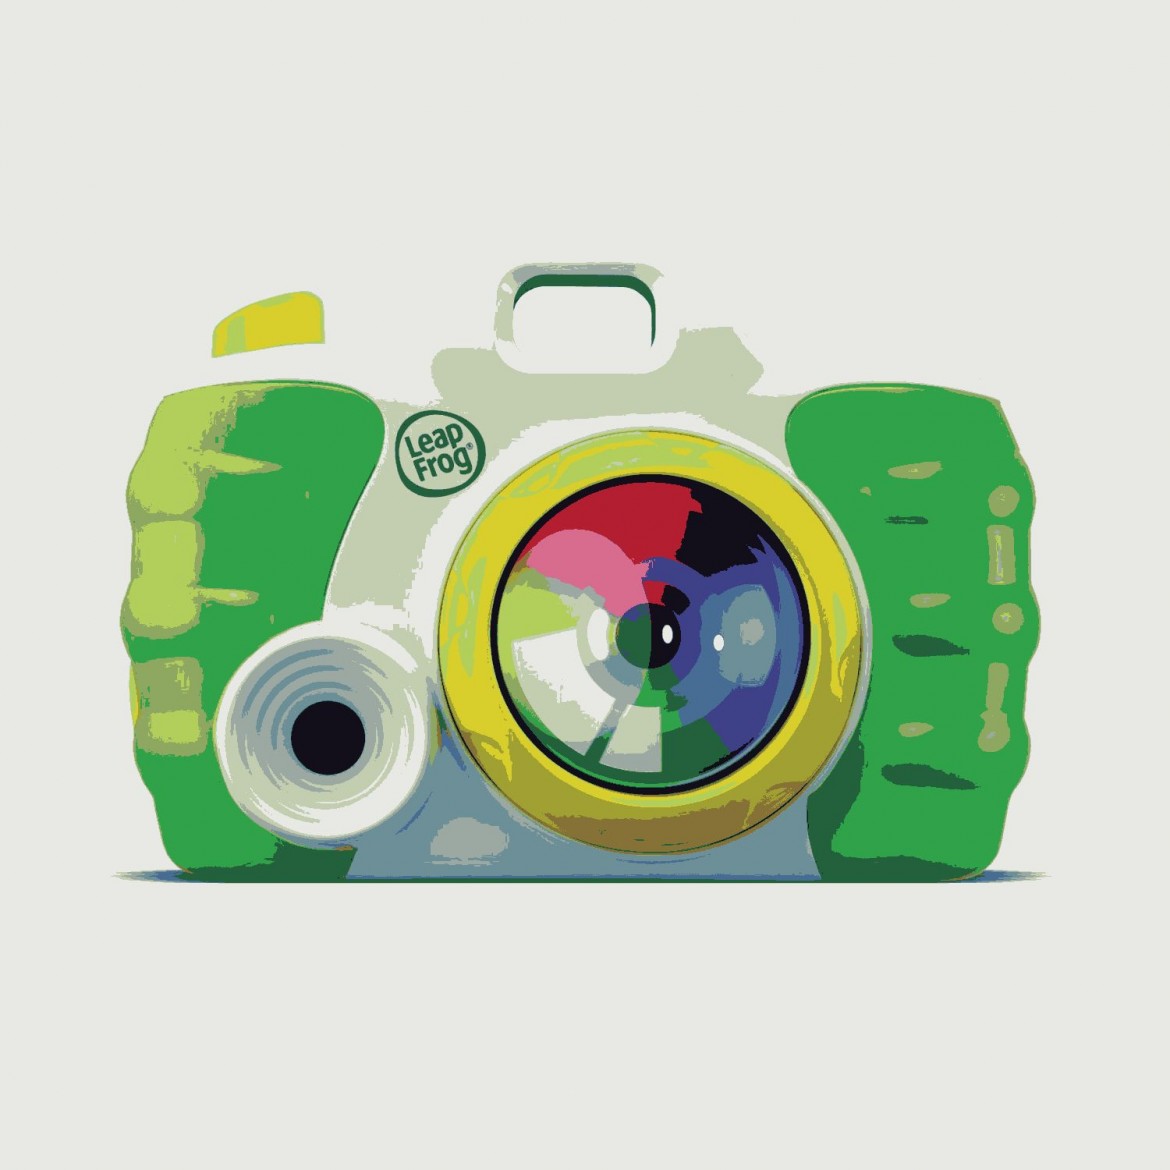 Creativity-Camera-App-1.jpg